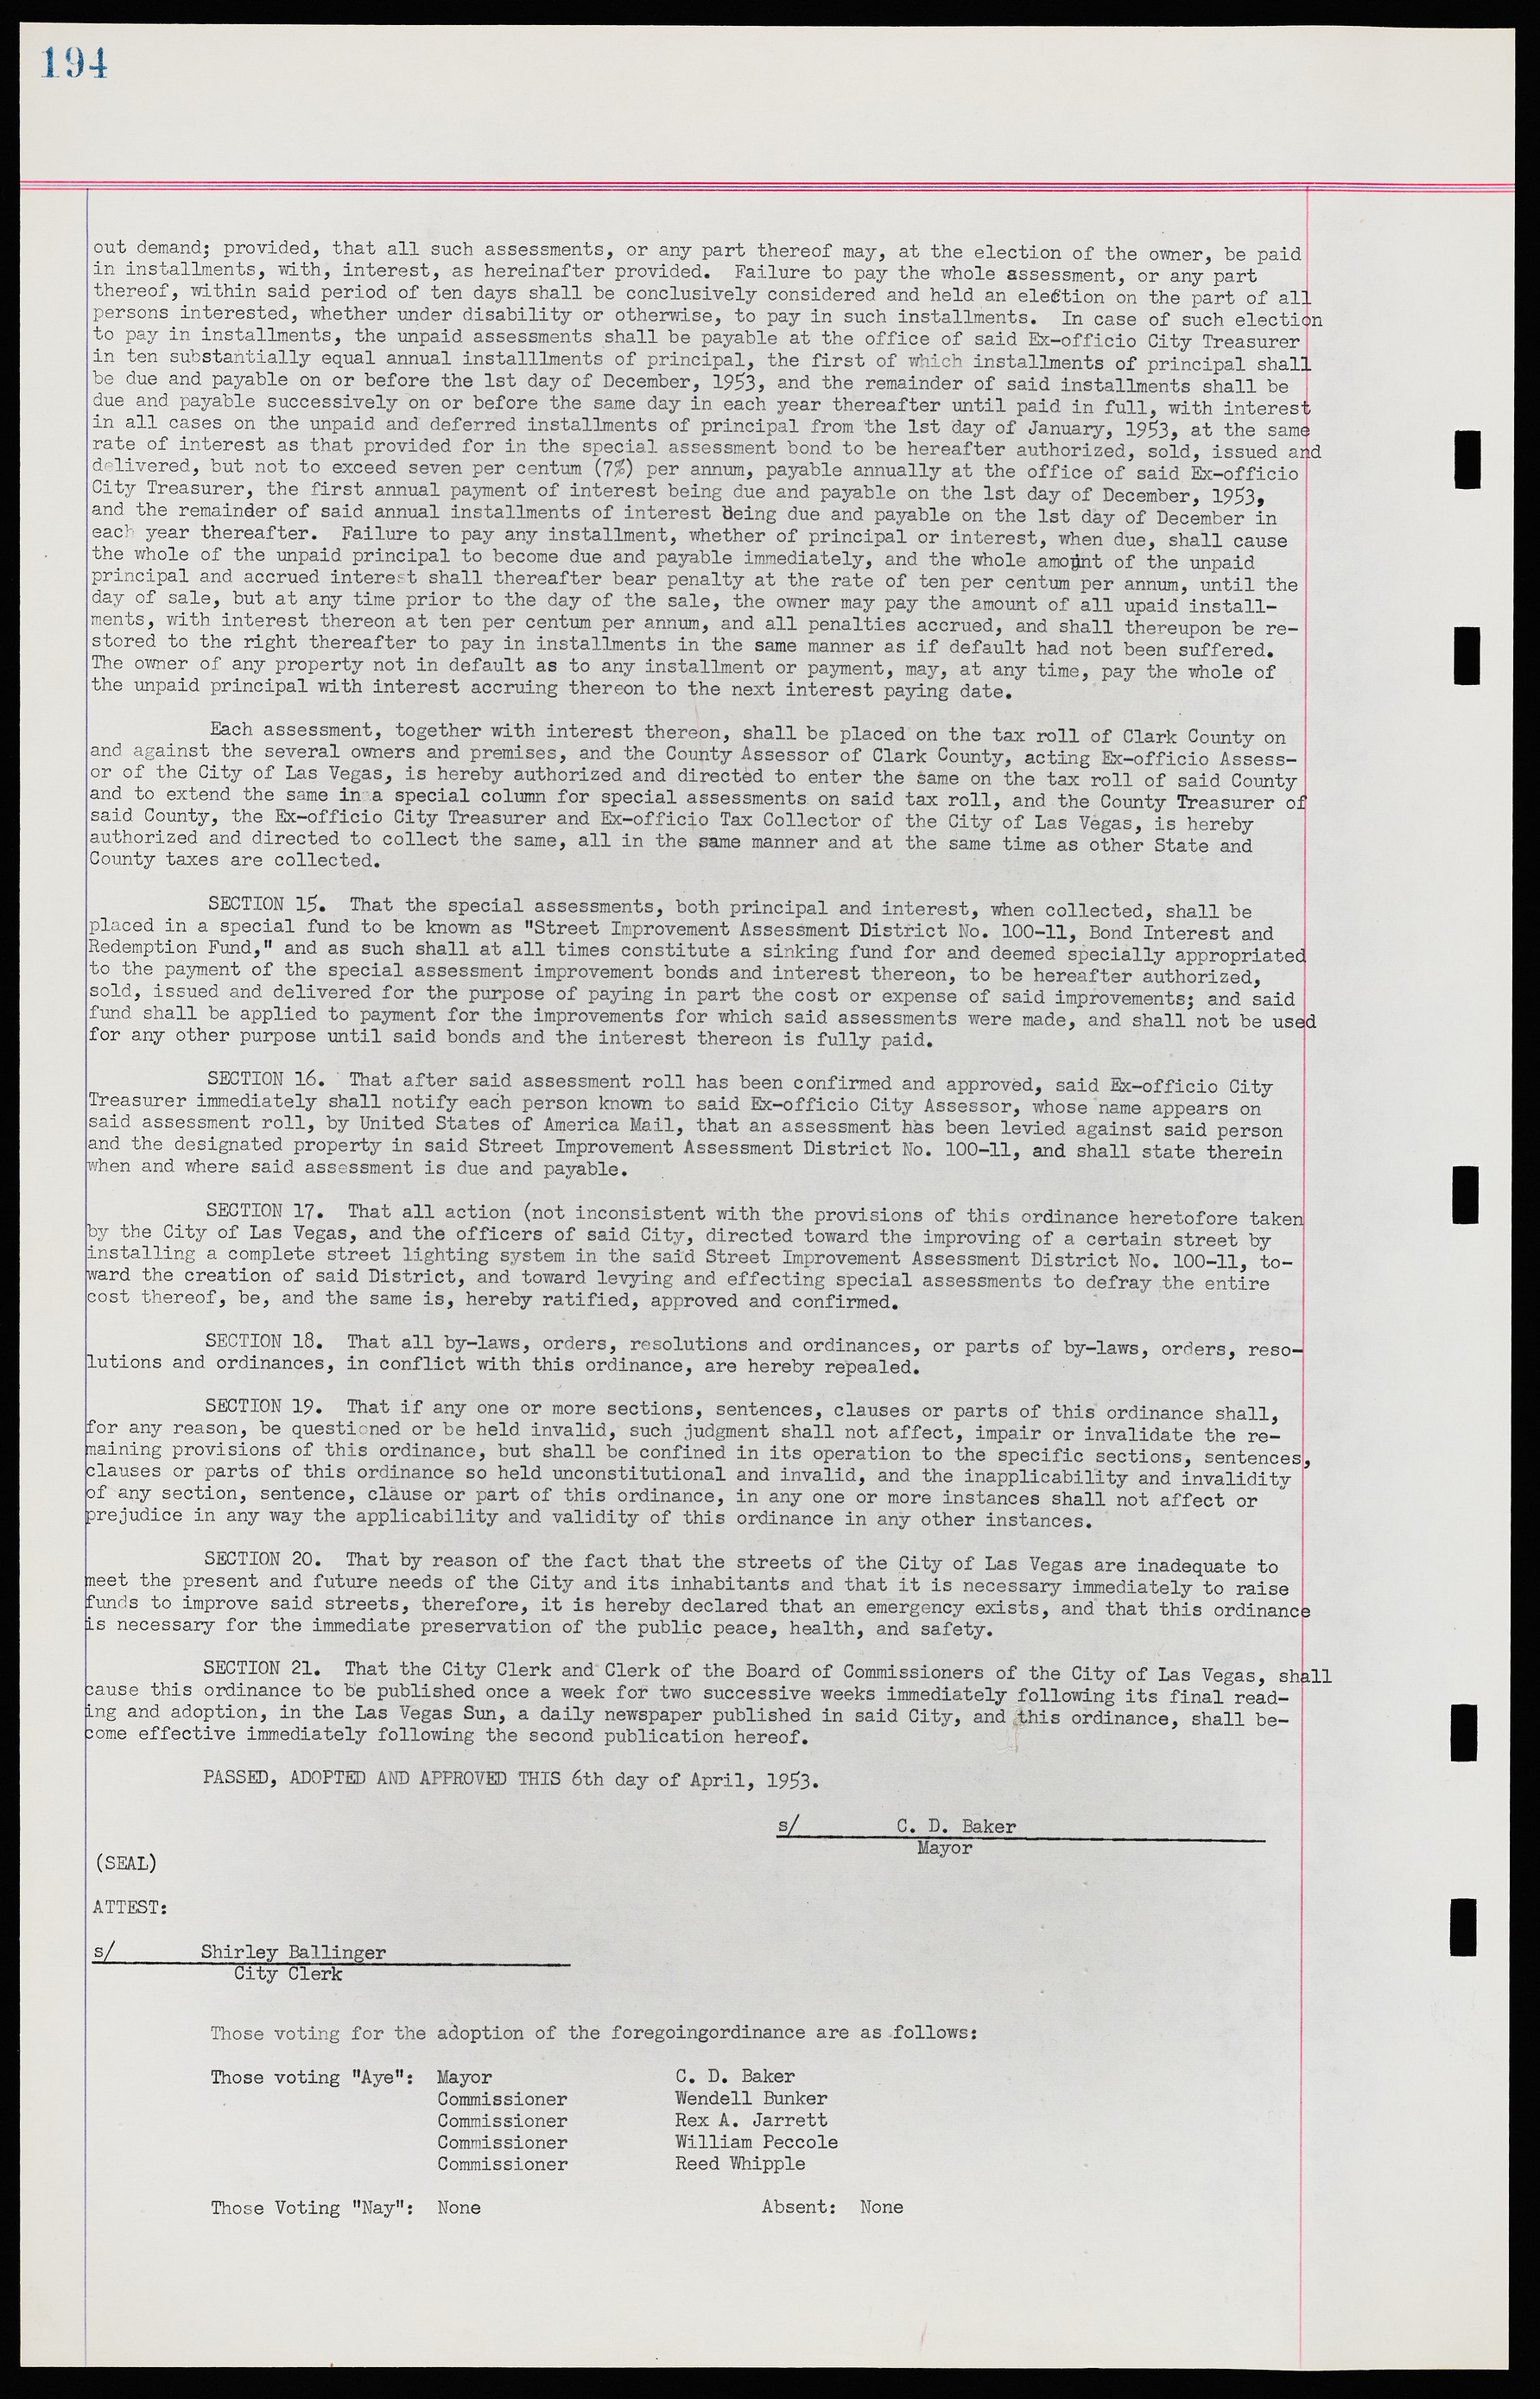 Las Vegas City Ordinances, November 13, 1950 to August 6, 1958, lvc000015-202